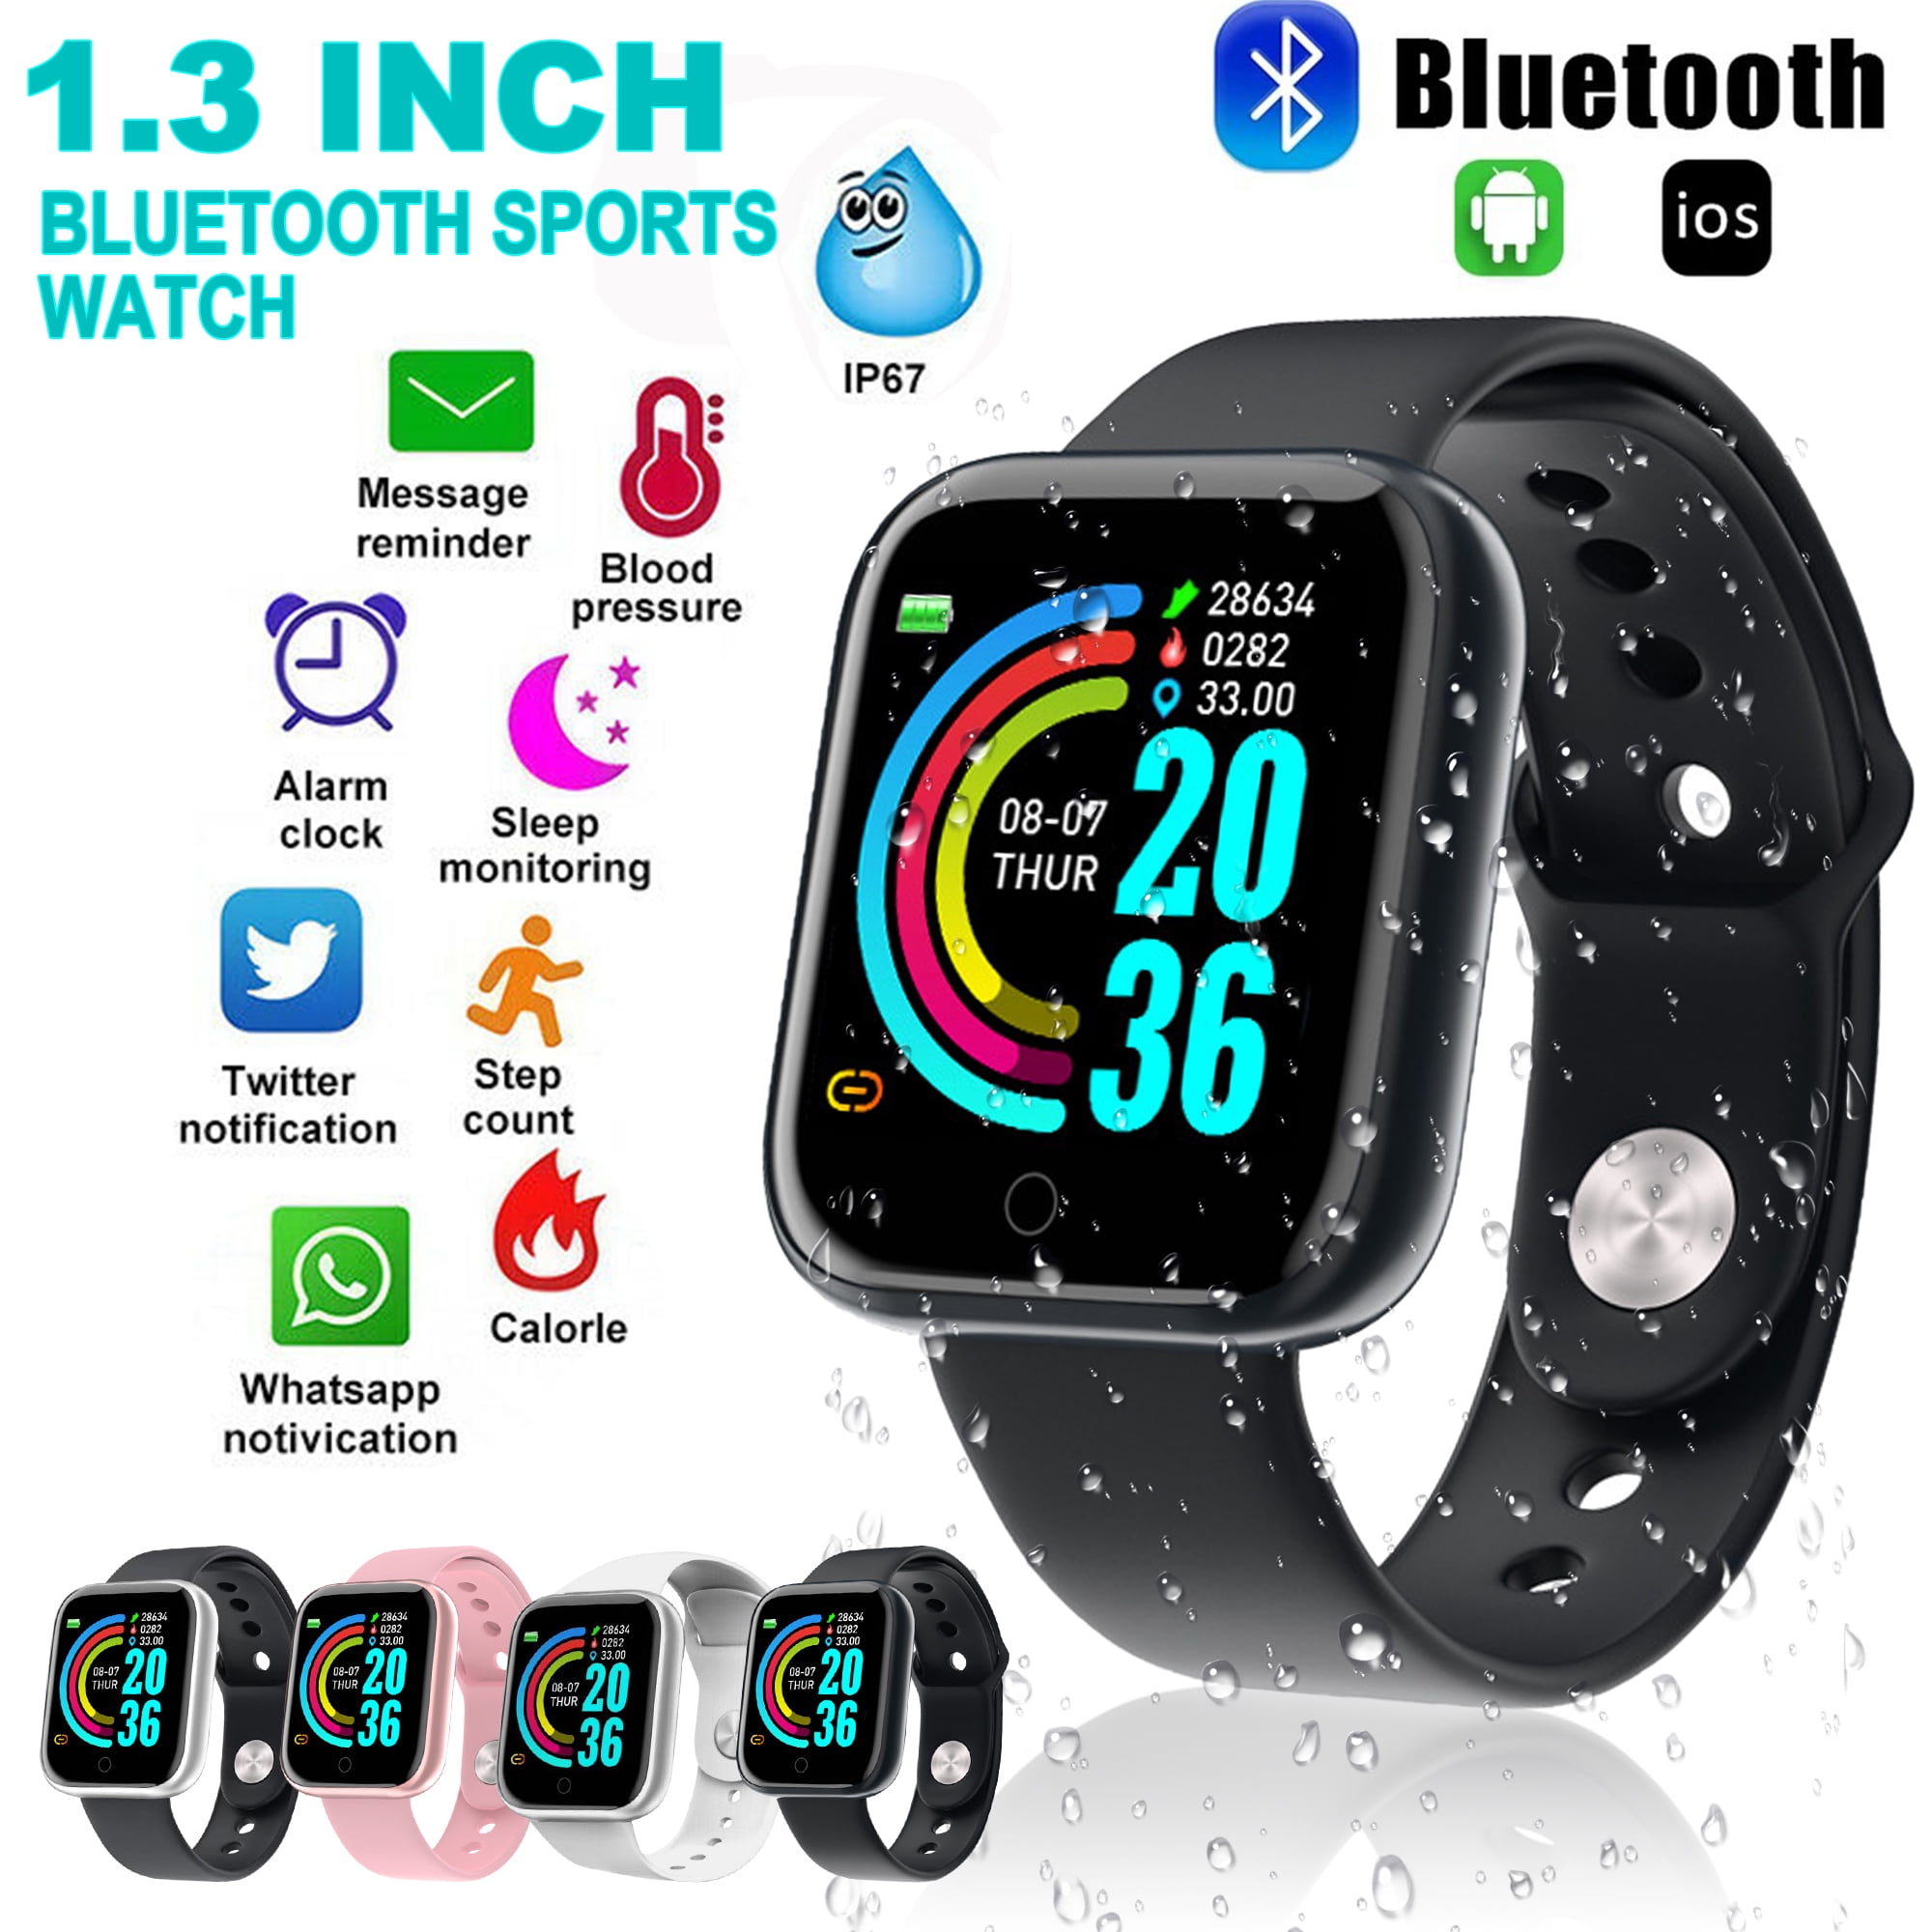 2020 Fitness Tracker Smart Watches Health Tracker for Women Men Kids IP68 Waterproof Andriod & iOS Support Blood Pressure Heart Rate Monitor - Walmart.com